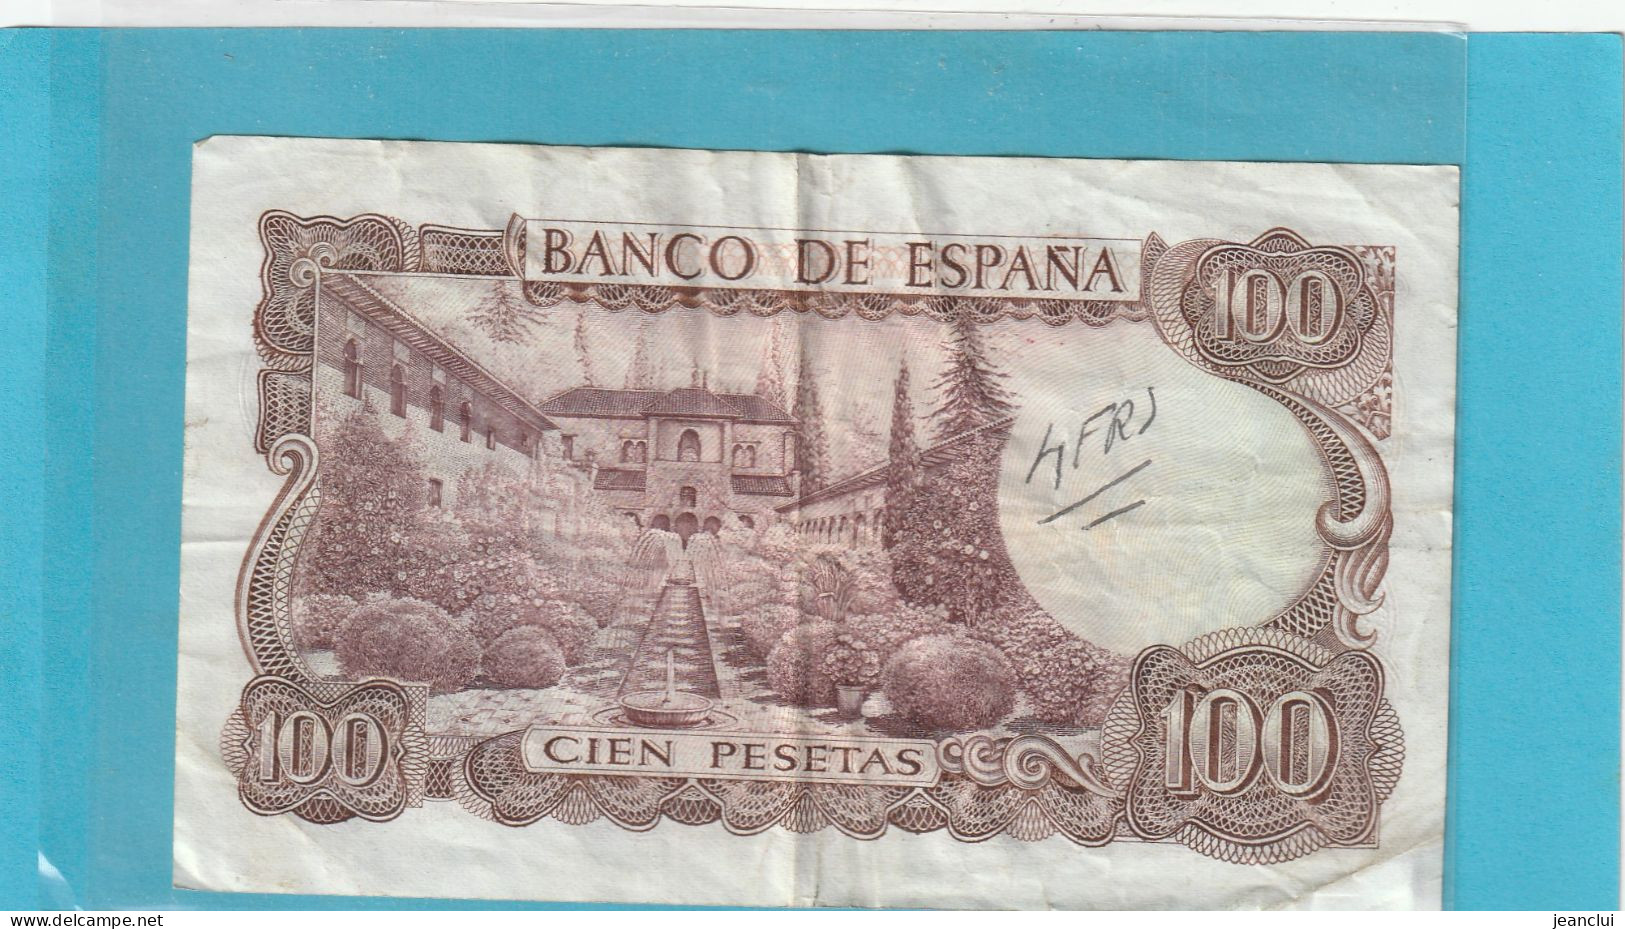 EL BANCO DE ESPANA  .  100 PESETAS  .  17-11-1970  .  N°  6V 6385742 .  2 SCANNES  .  BILLET USITE - 100 Peseten